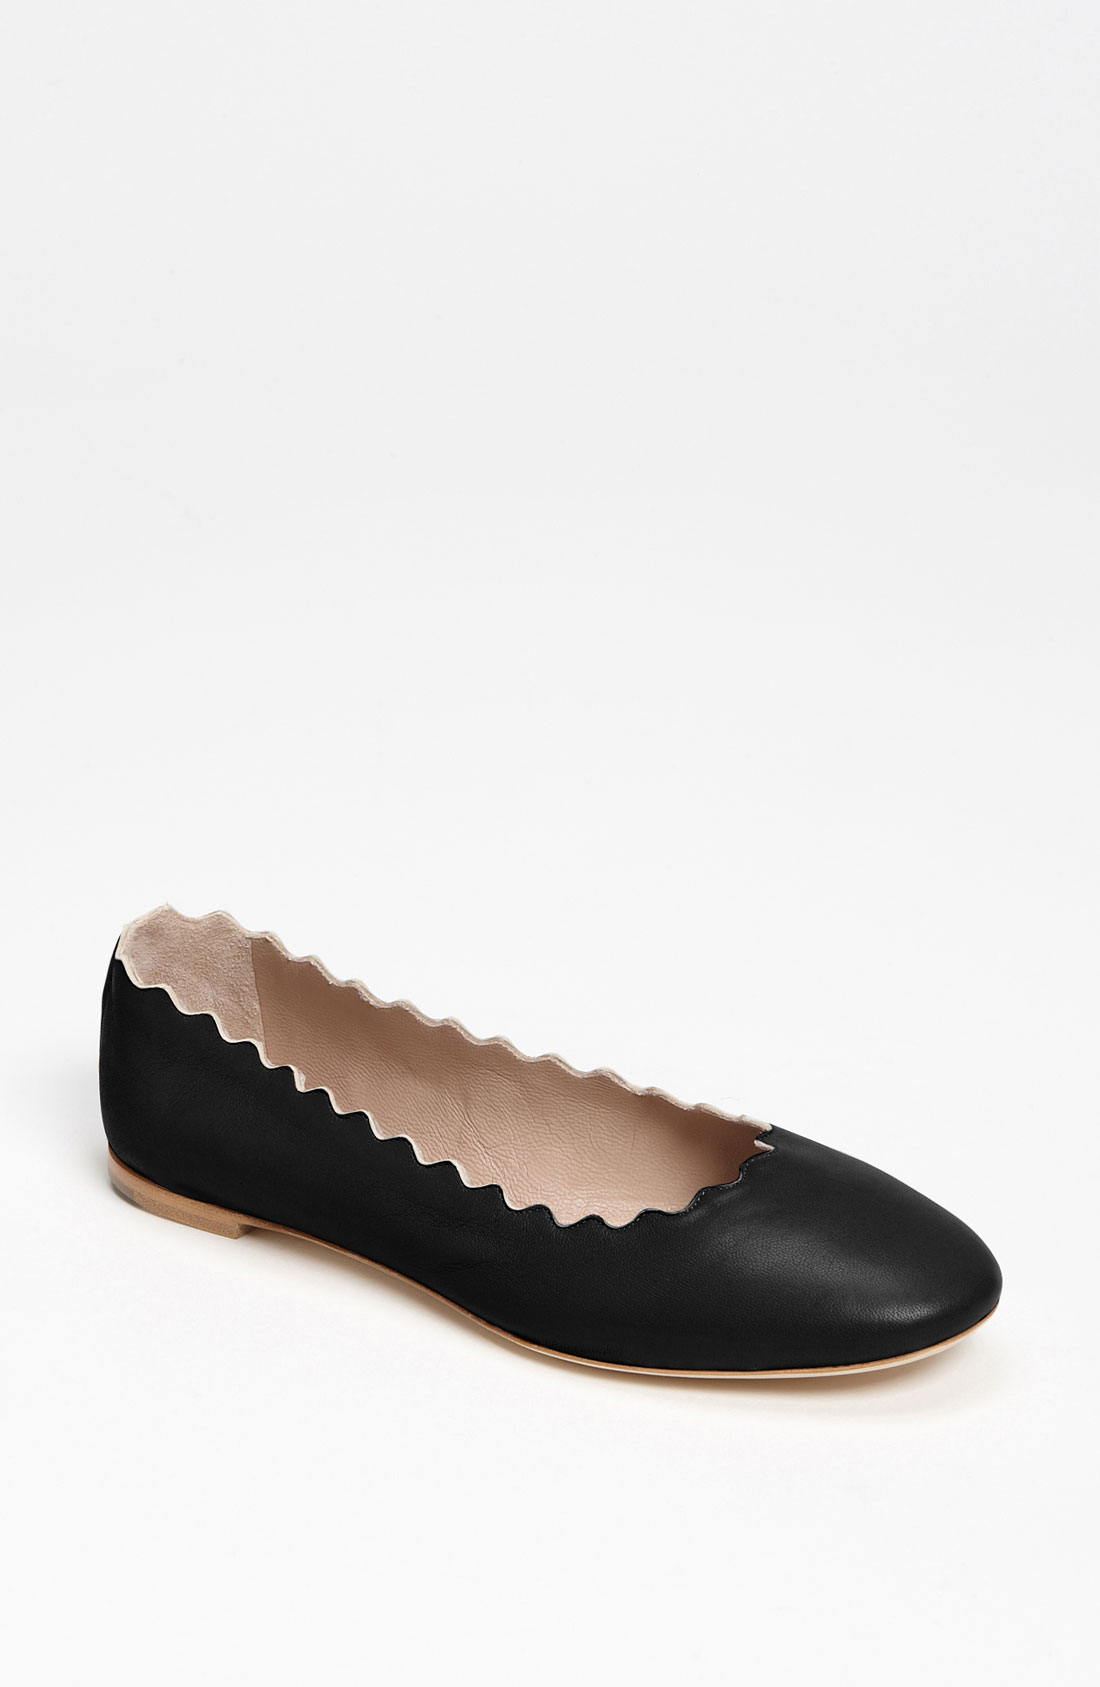 Chloé Scalloped Ballet Flat in Black | Lyst